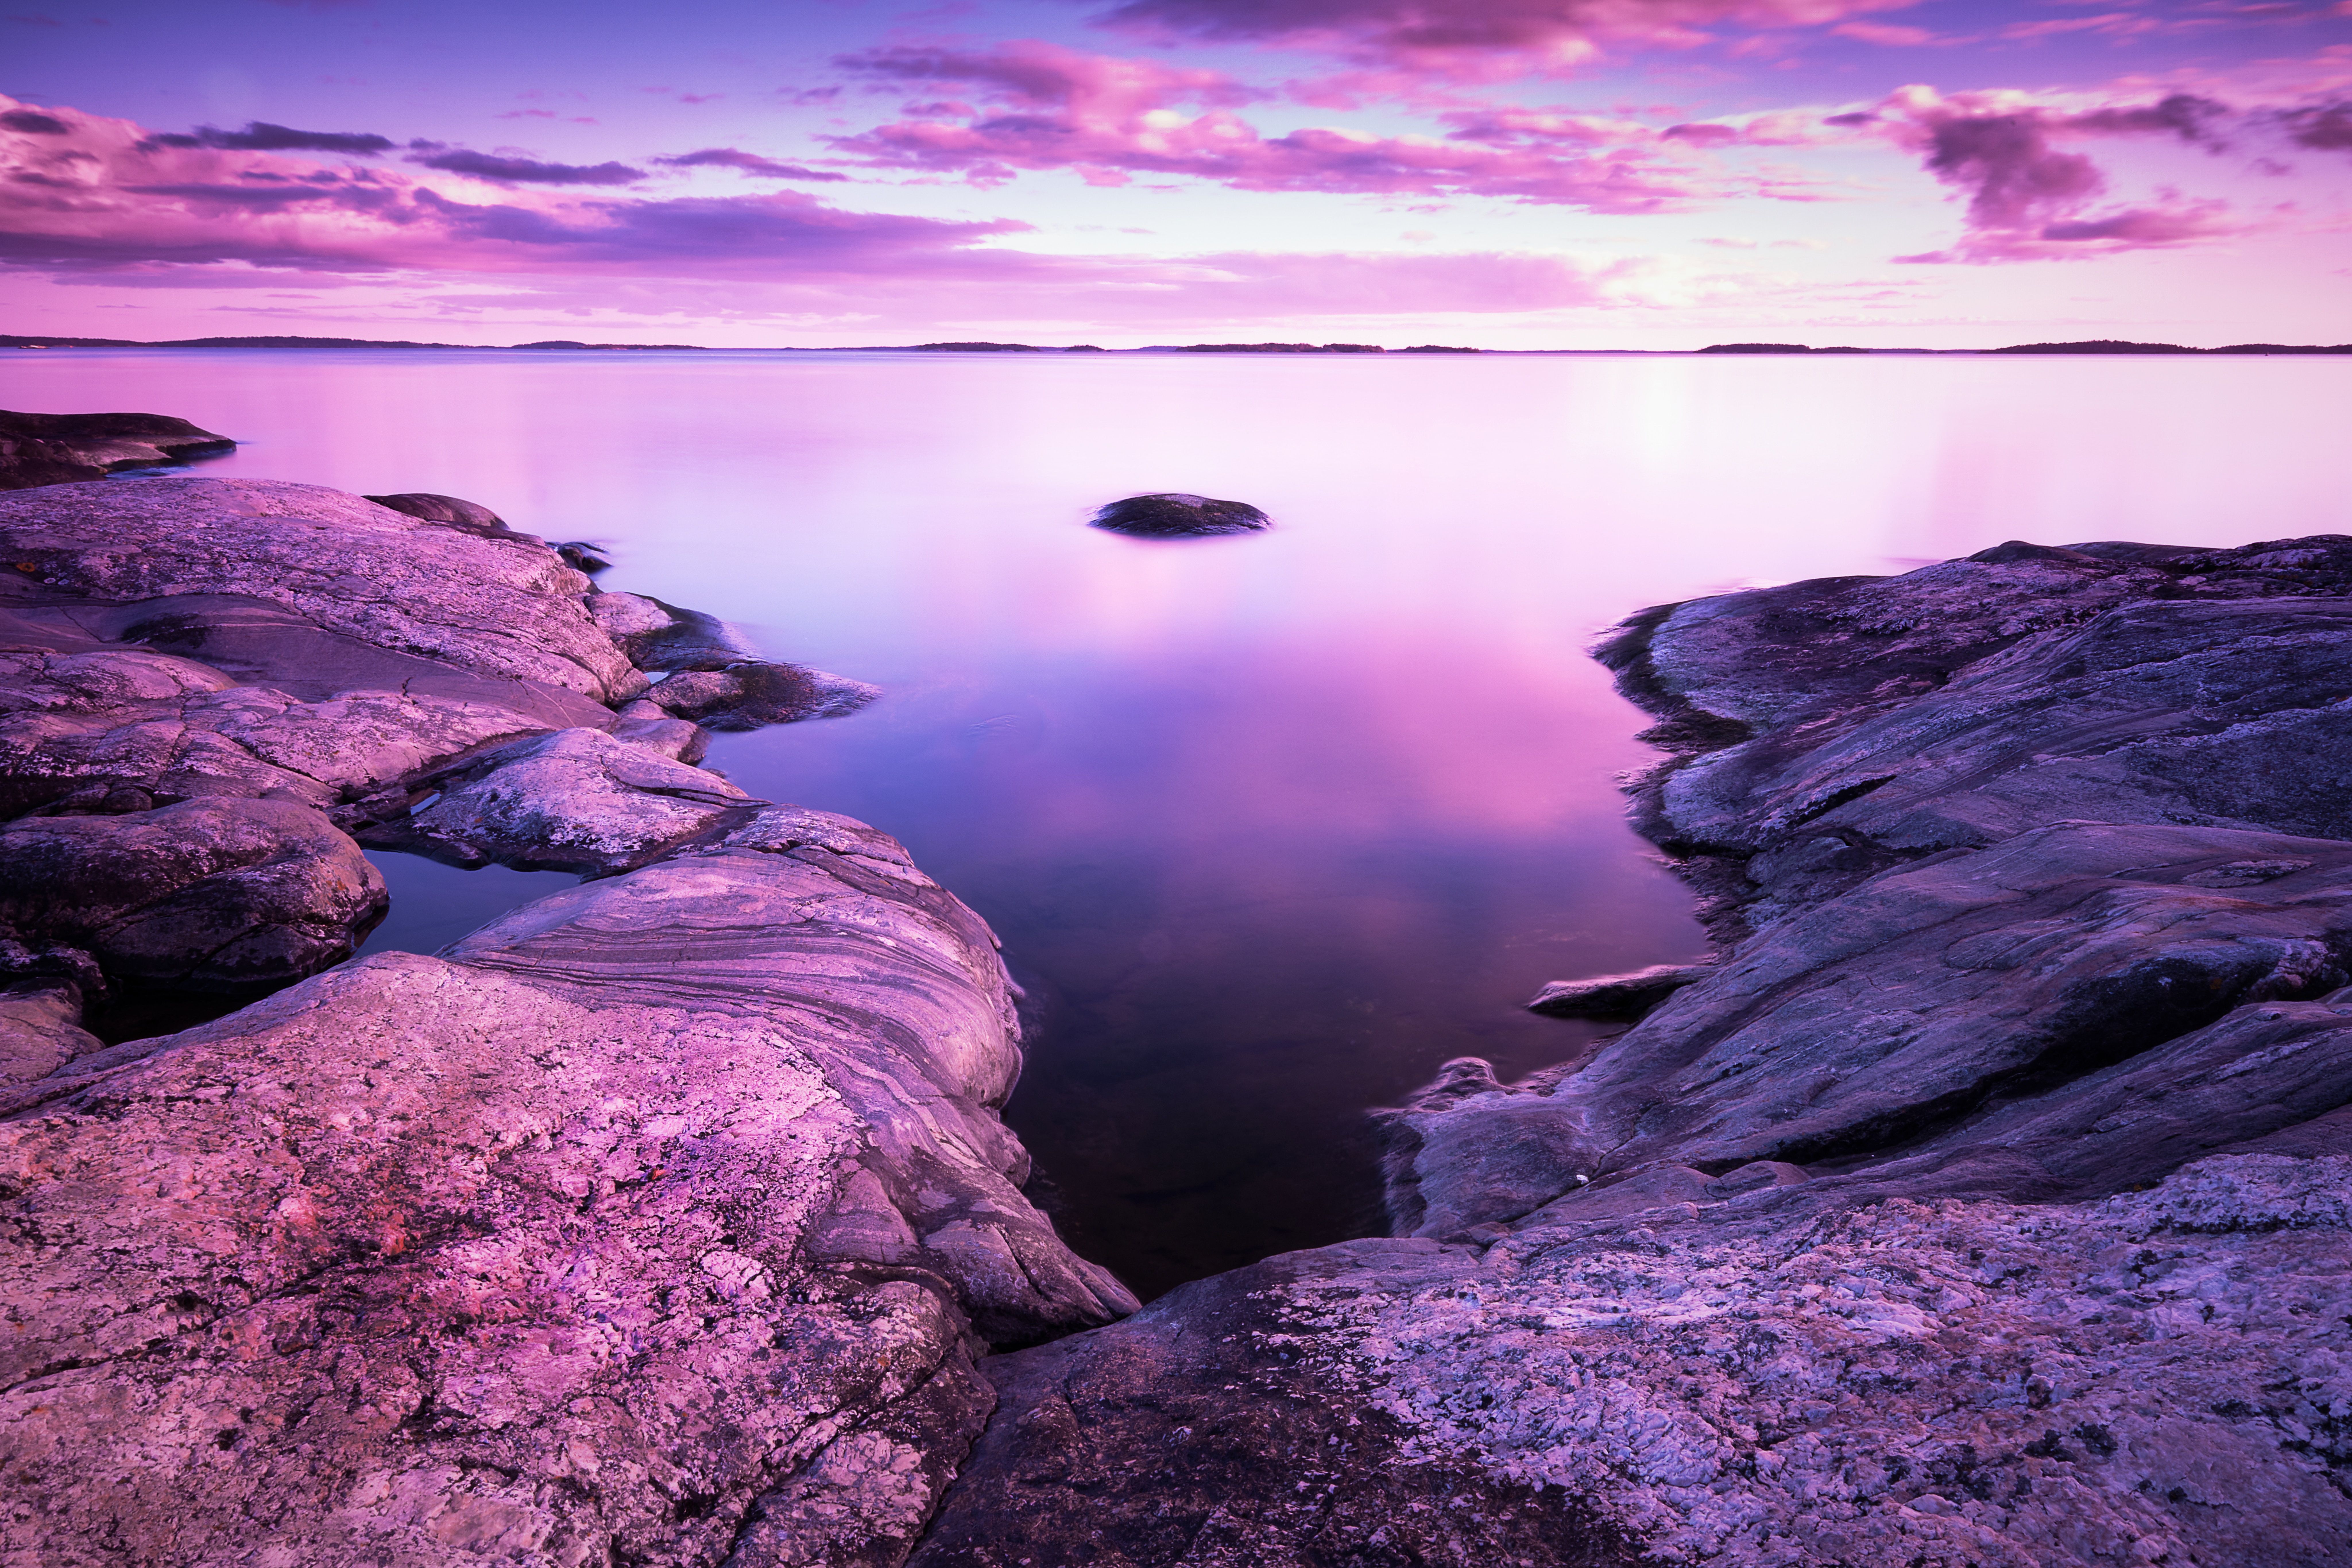 Sunset 4K Wallpaper, Scenery, Rocks, Lake, Purple sky, Pink, 8K, Nature